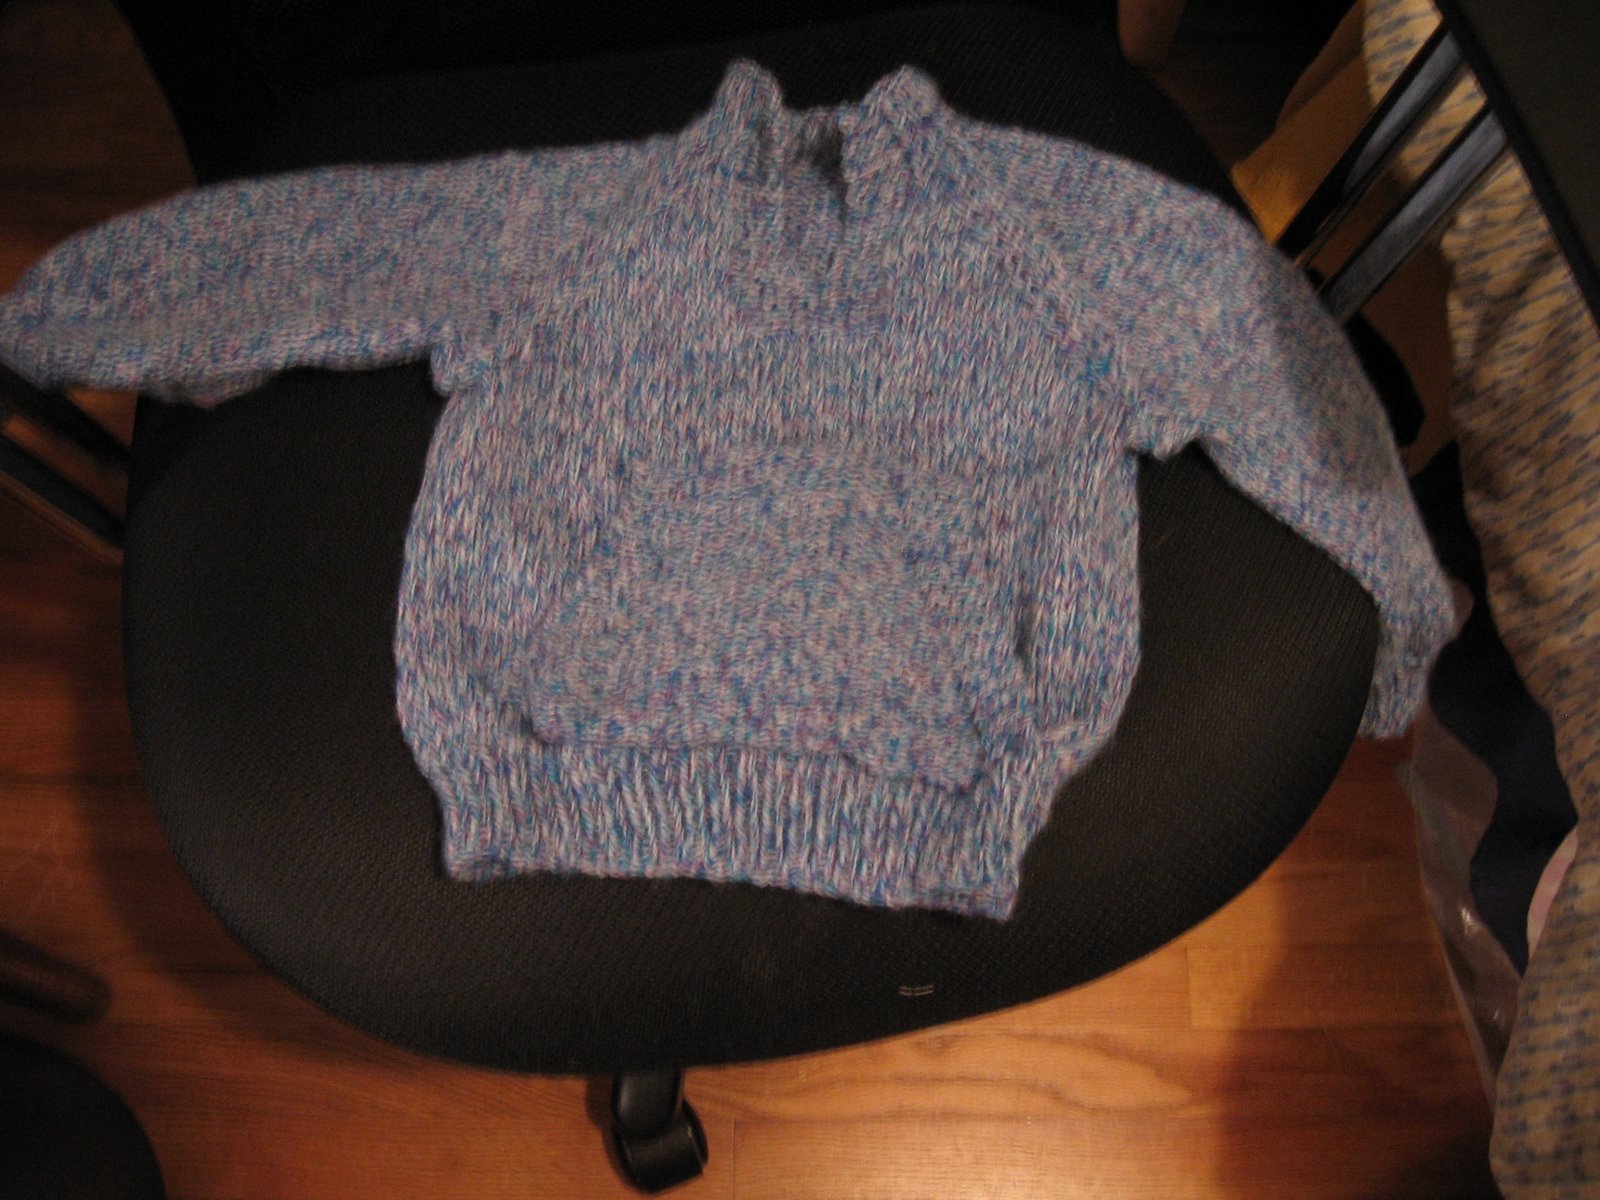 [blue+sweater.jpg]